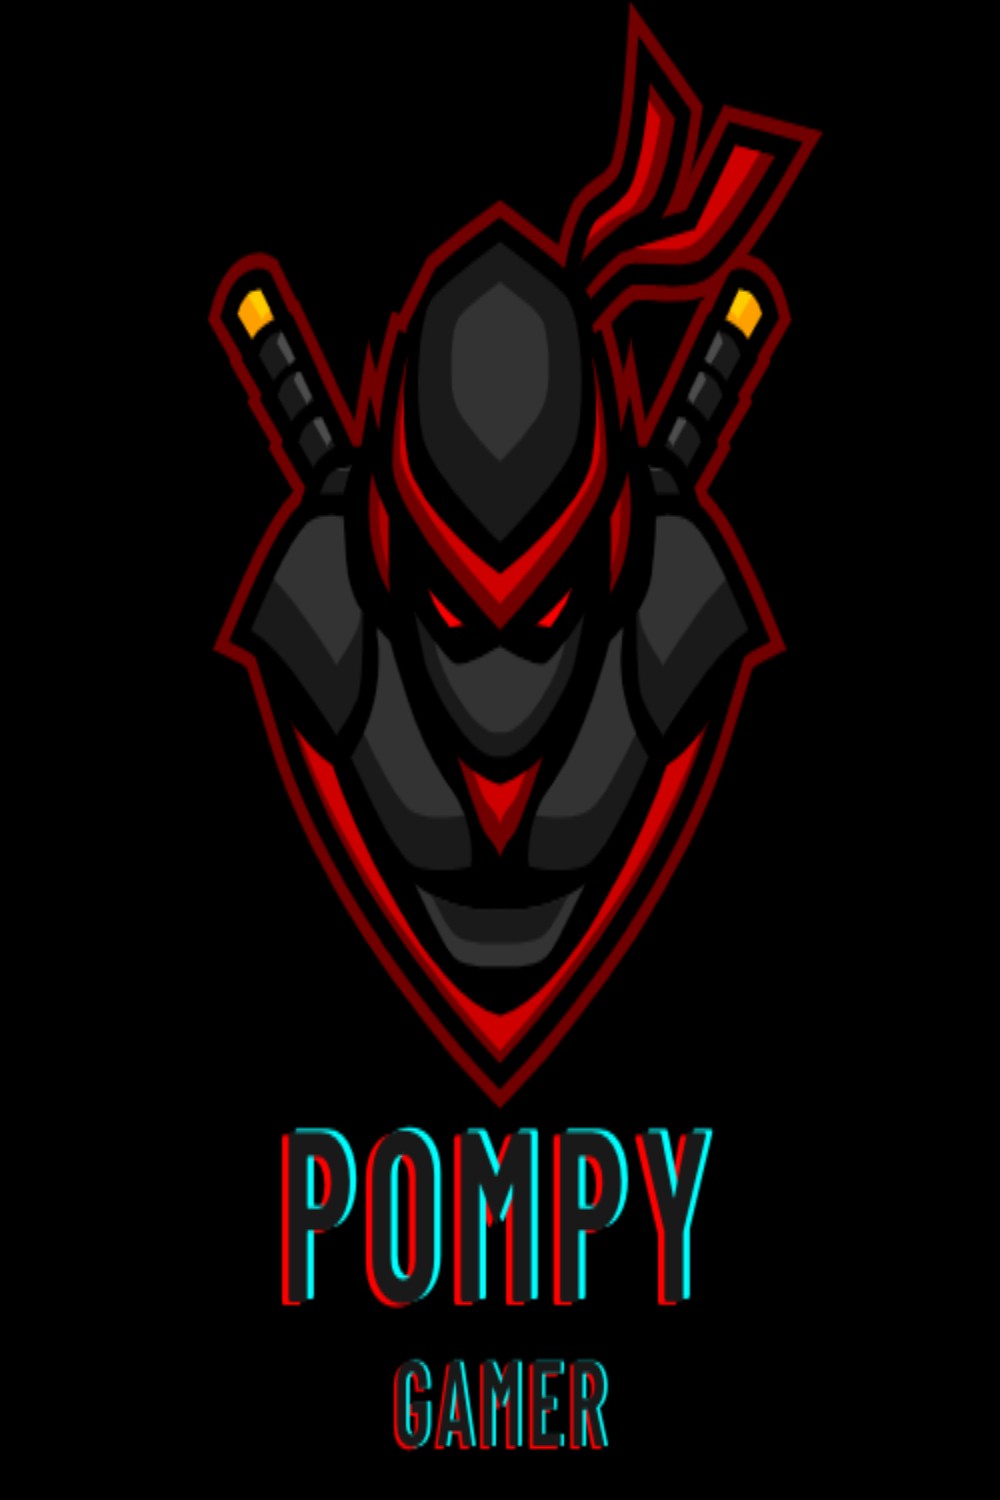 Gaming Logo By Pompy - MasterBundles